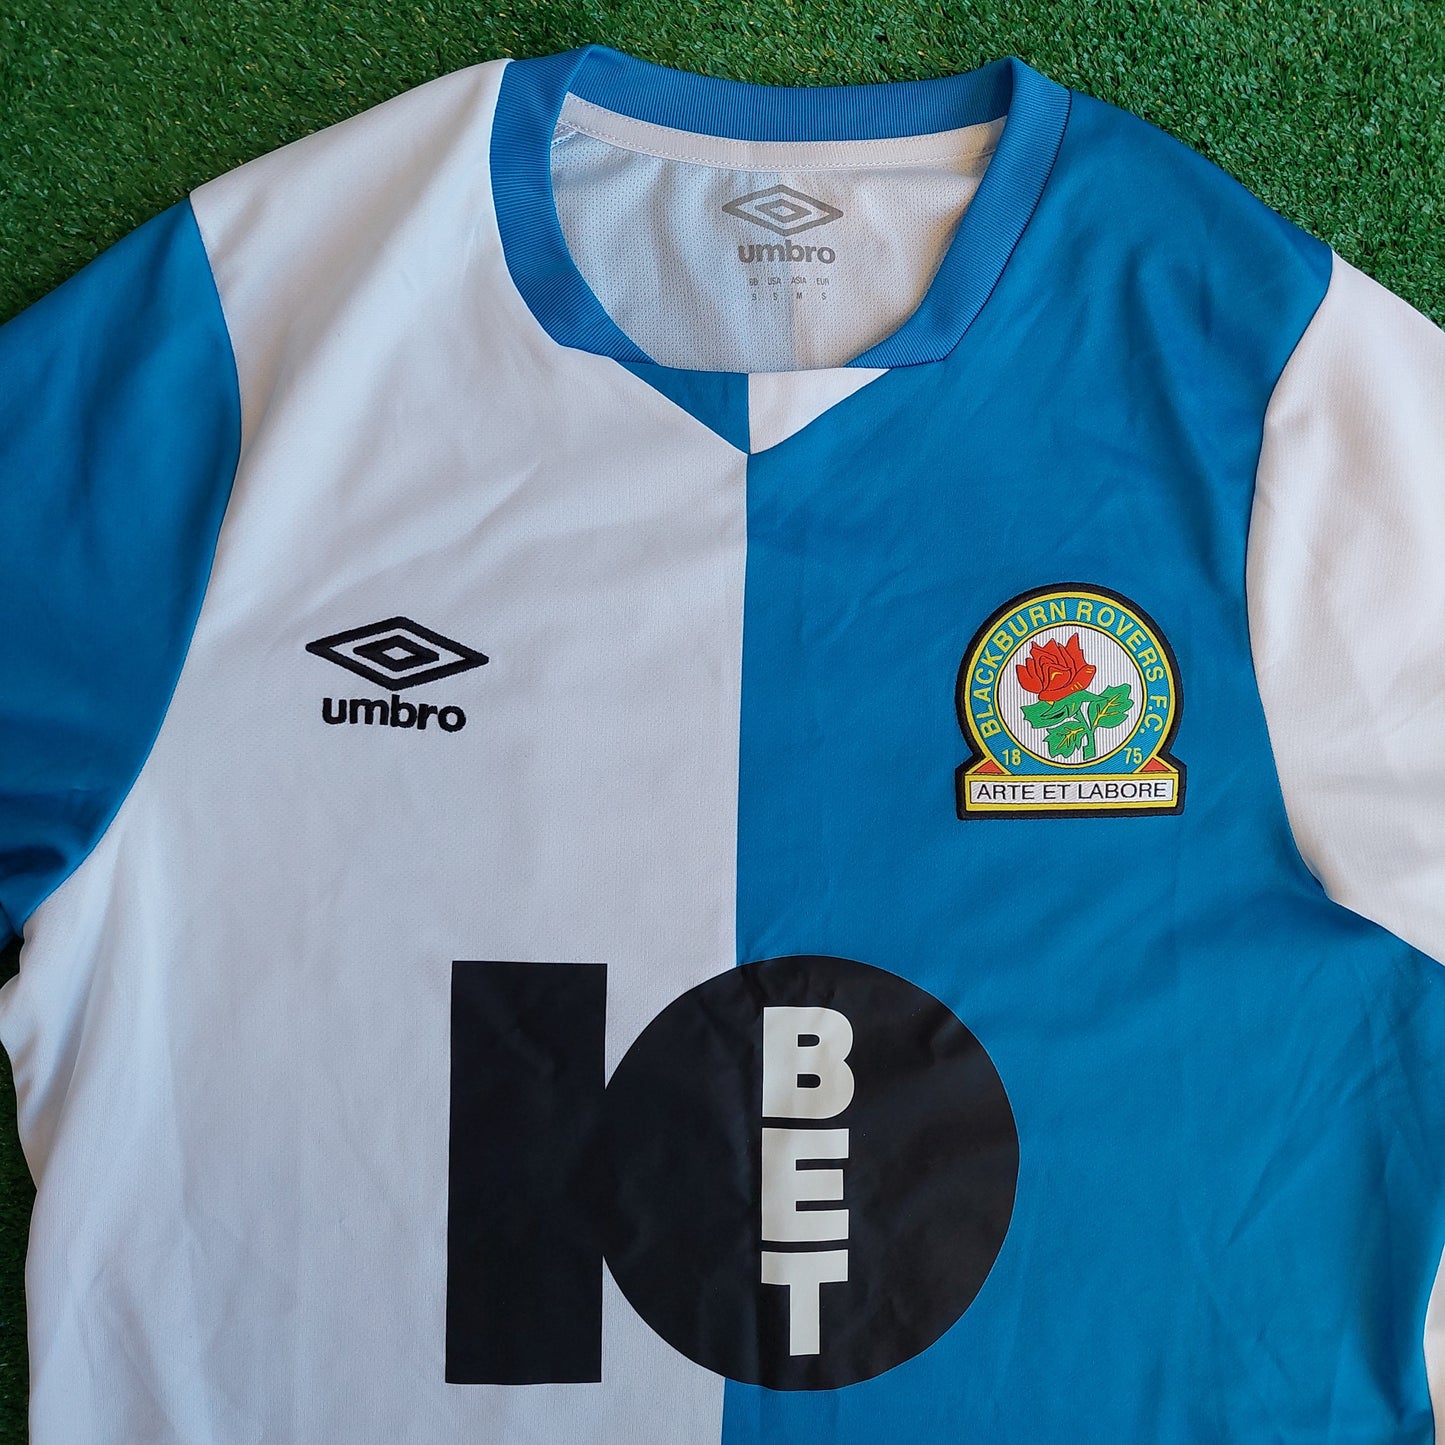 Blackburn Rovers 2019/20 Home Shirt (Excellent) - Size S